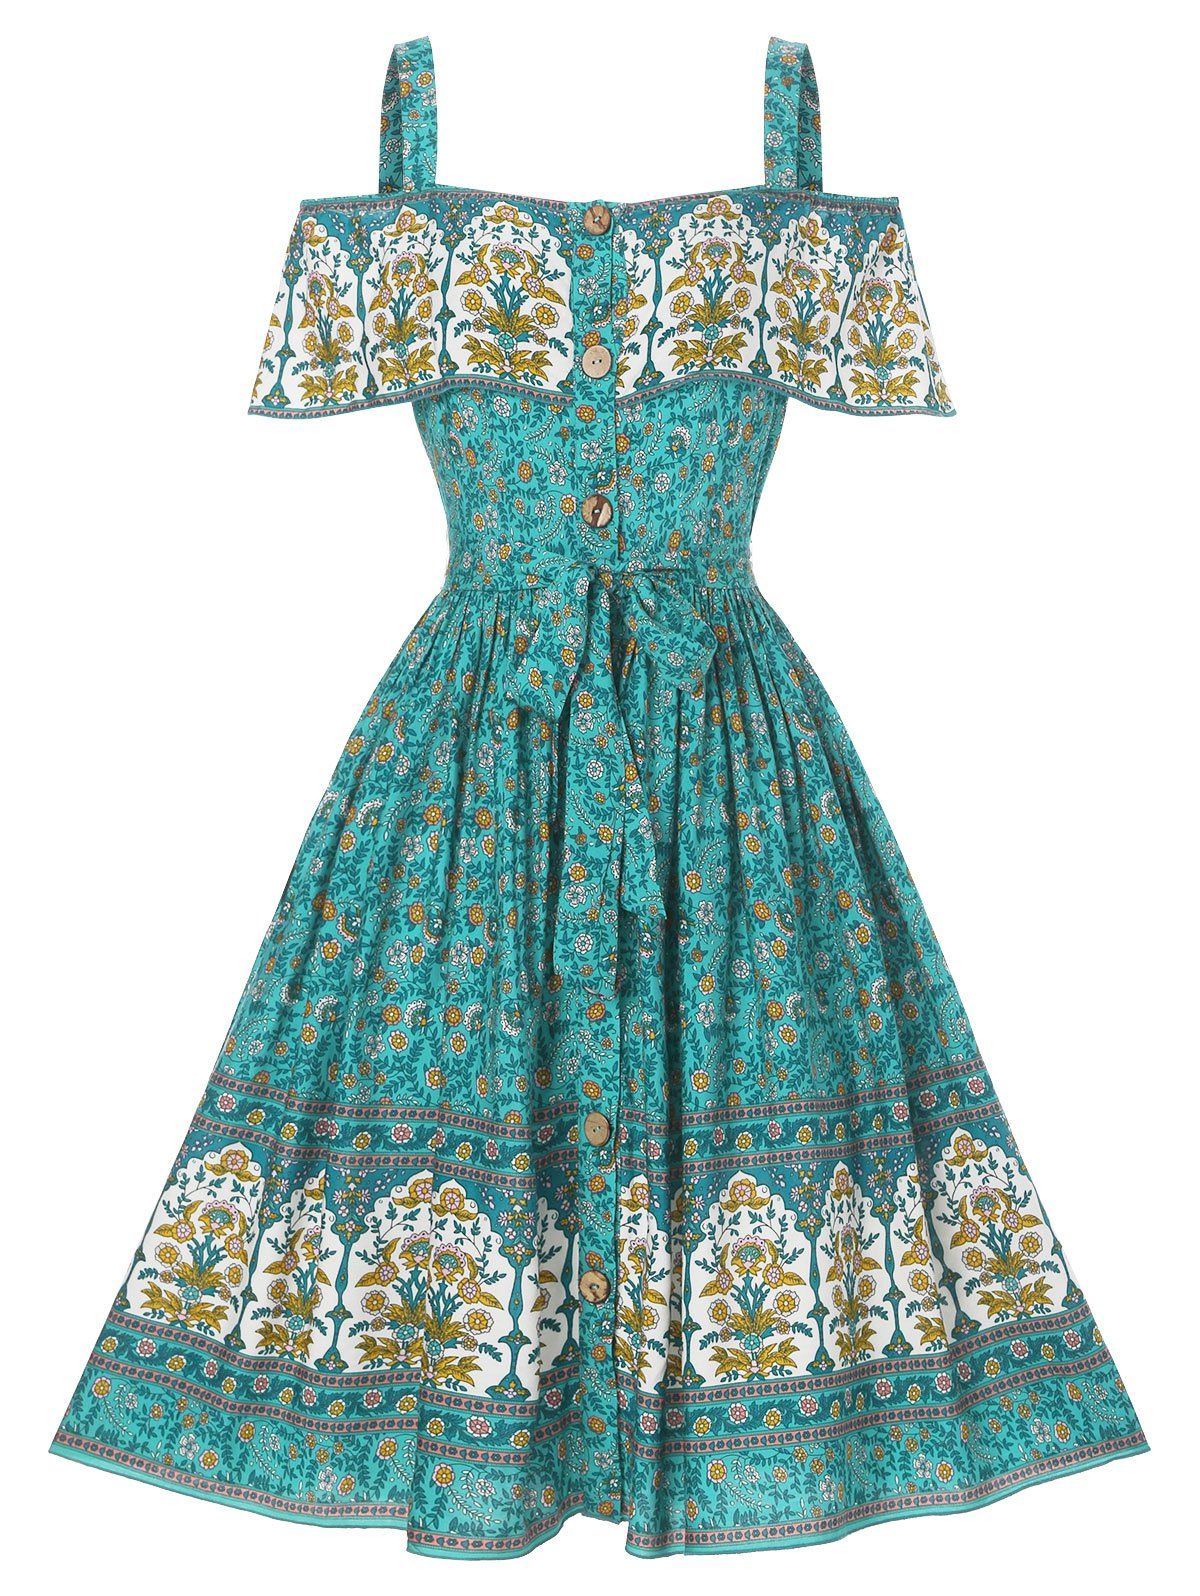 Floral Print Flounce Cold Shoulder Bowknot Dress - GREEN XL